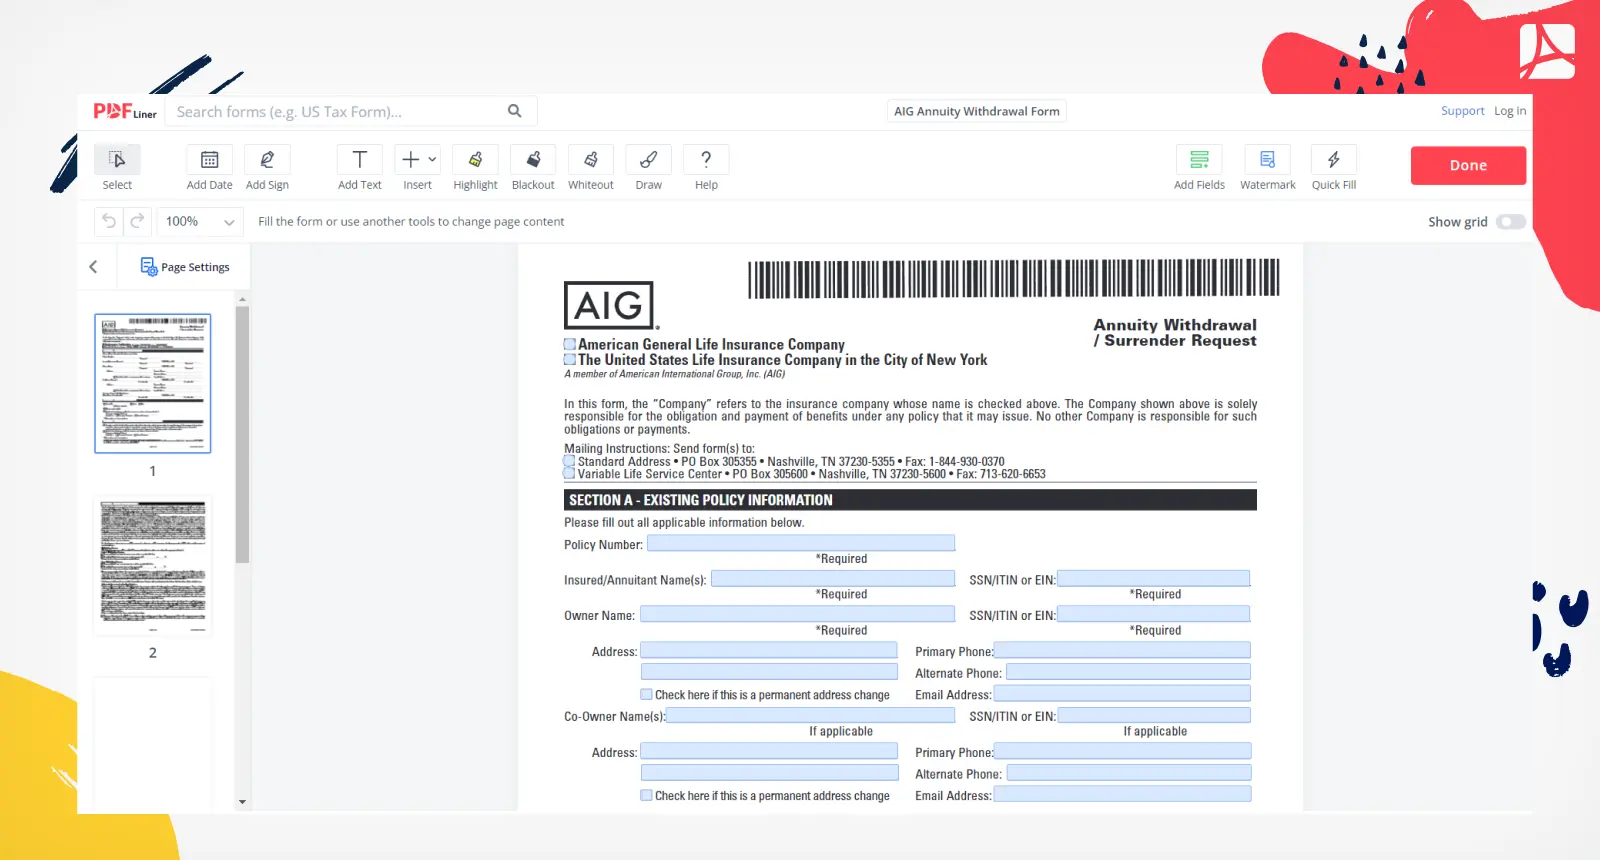 AIG Annuity Withdrawal Form Screenshot